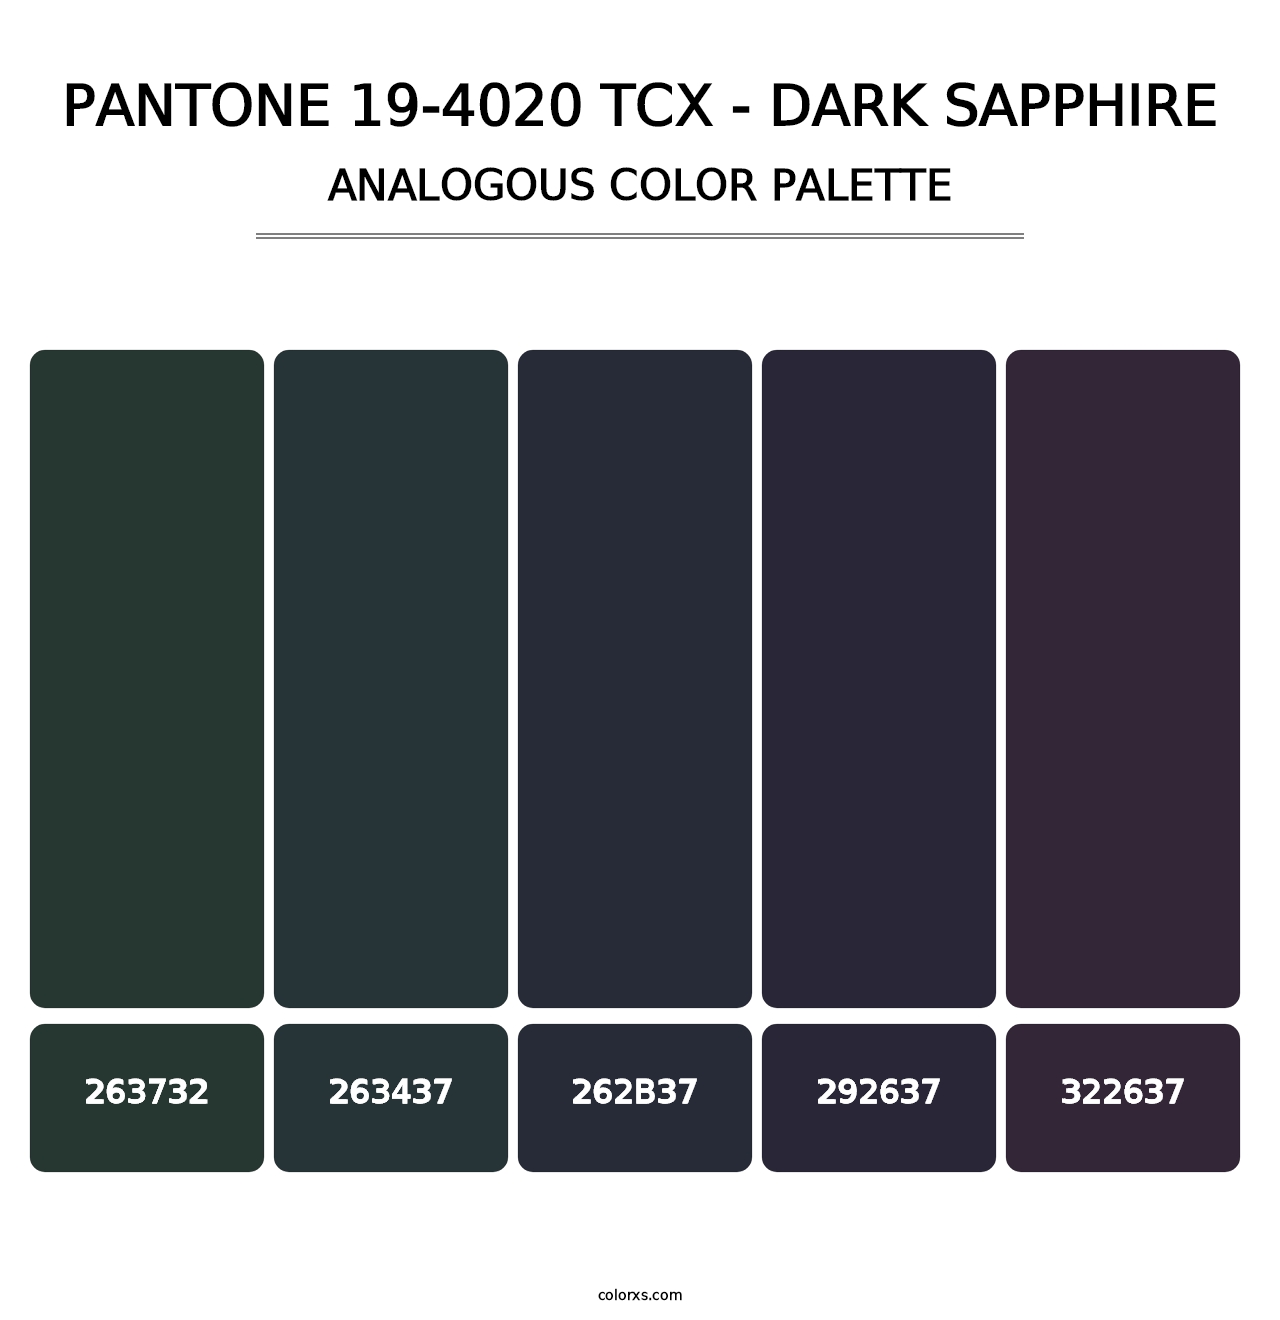 PANTONE 19-4020 TCX - Dark Sapphire - Analogous Color Palette